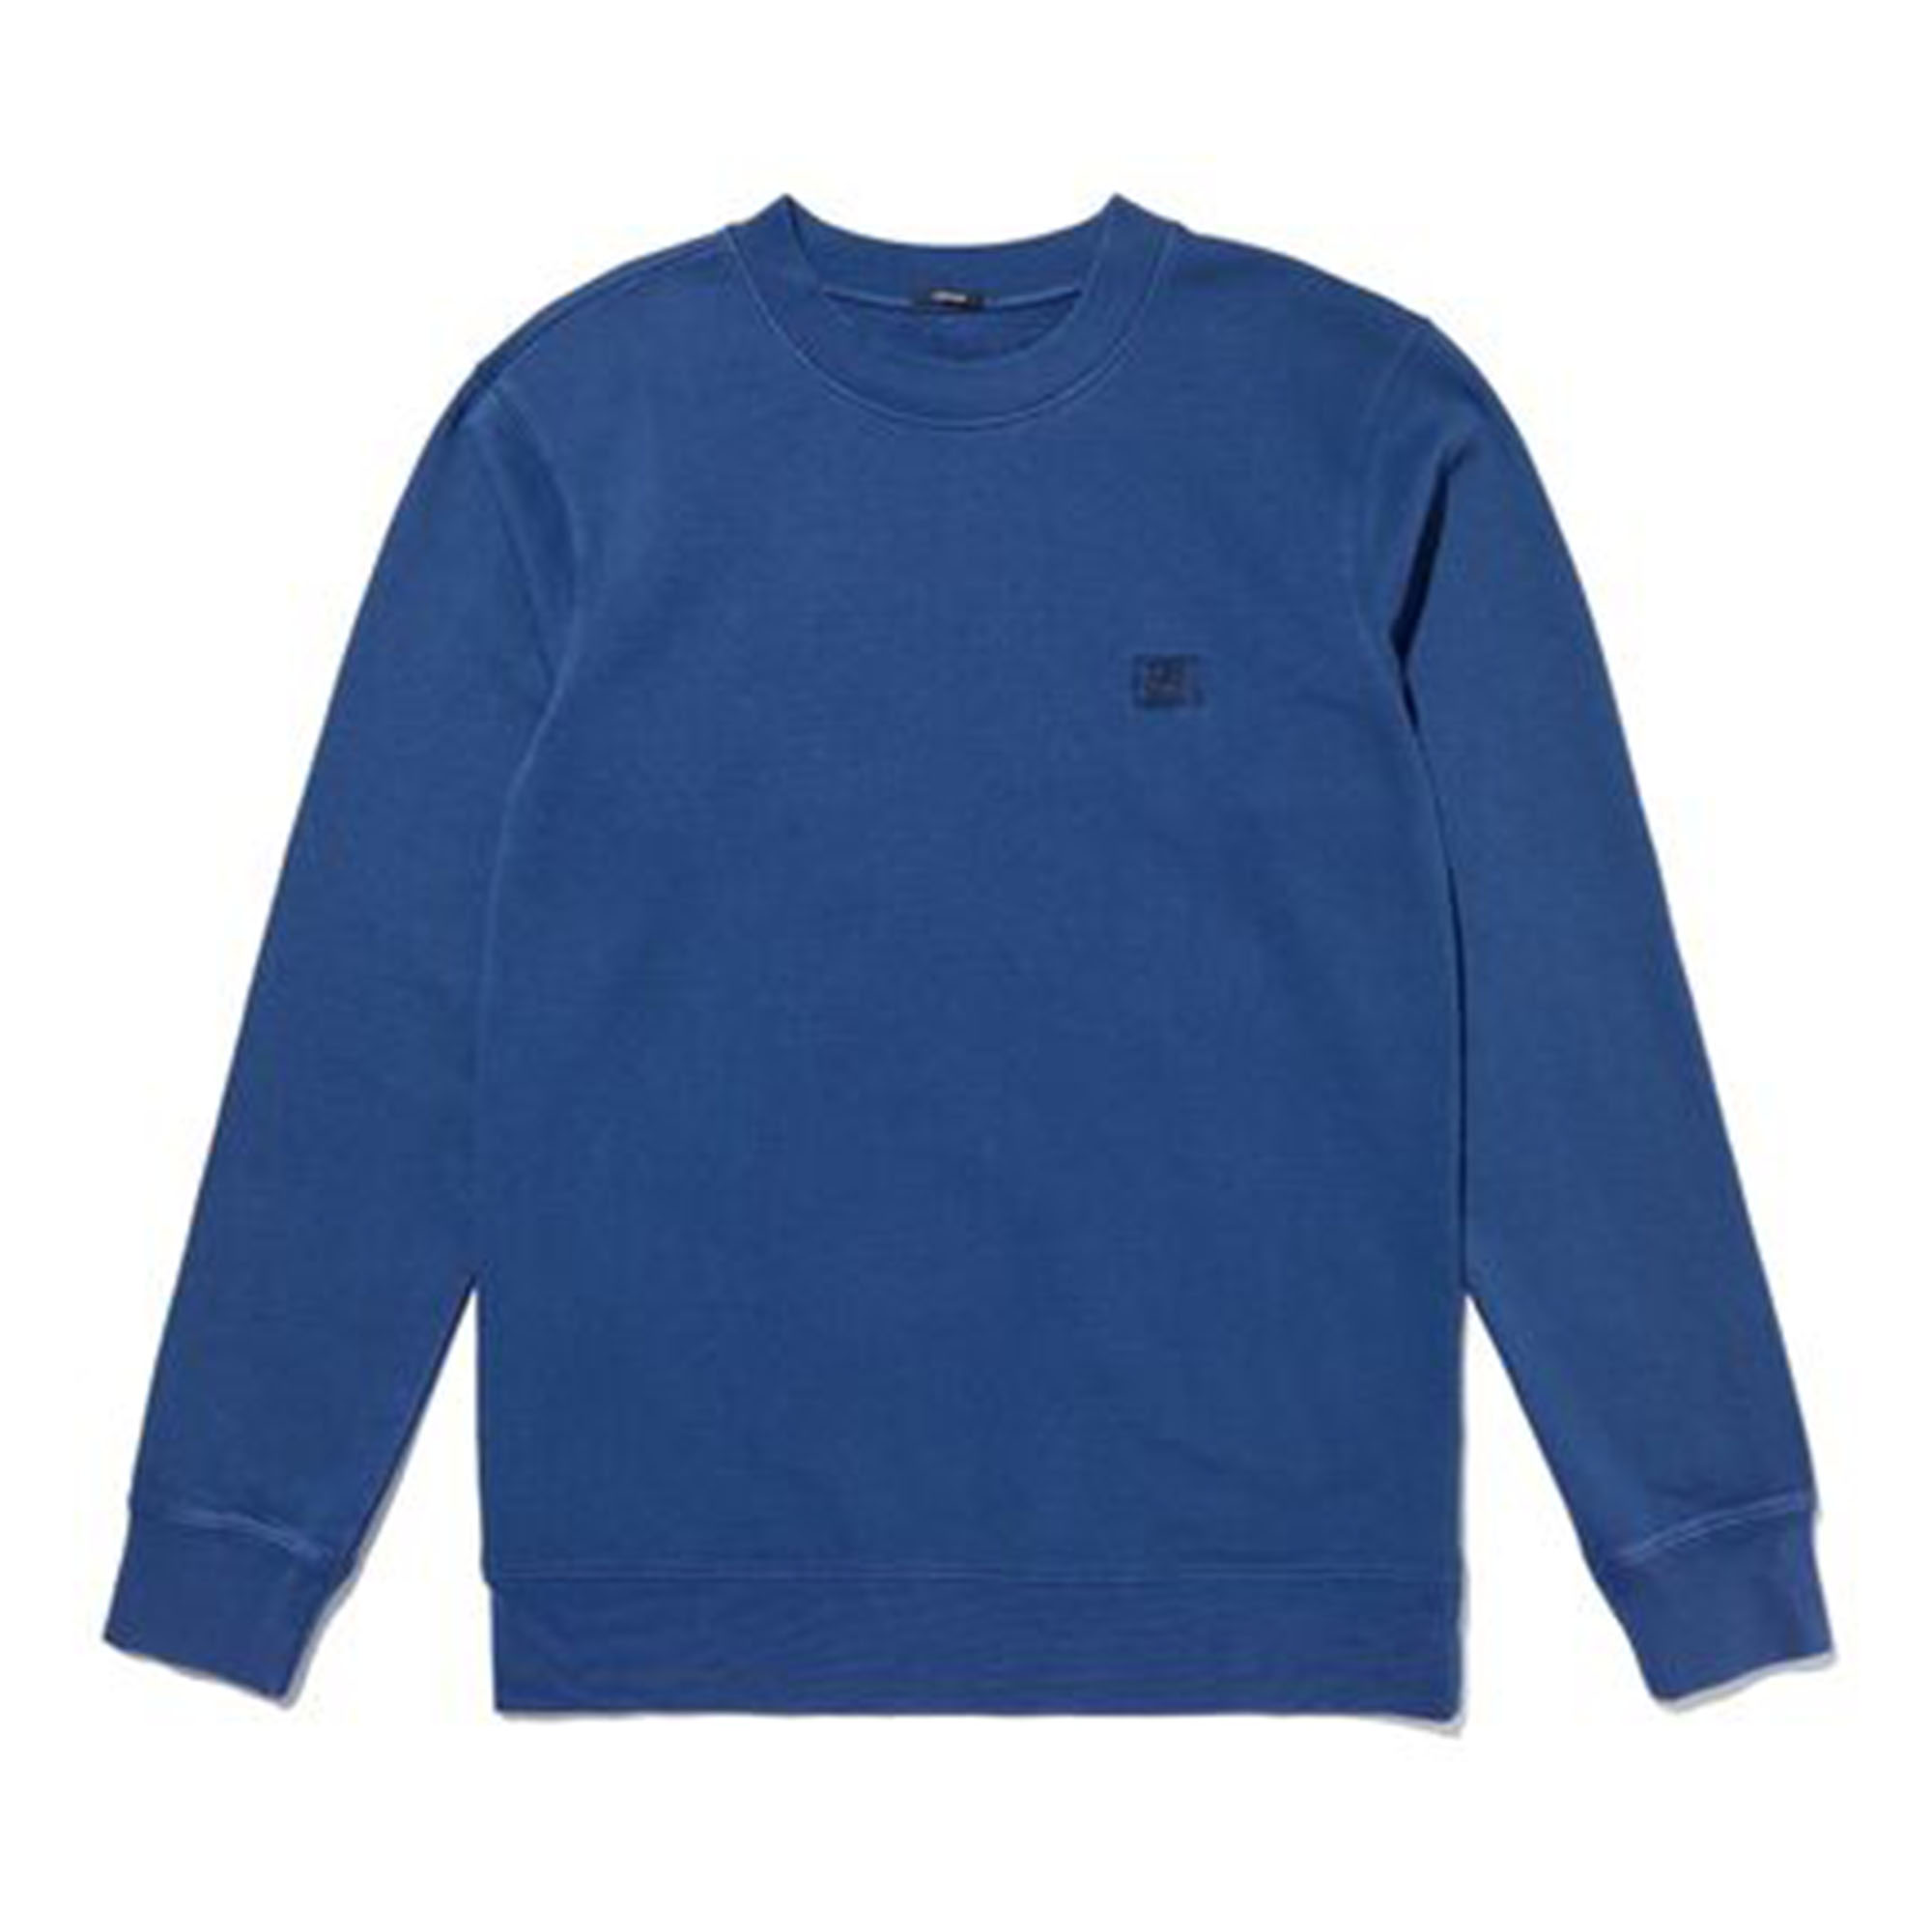 Denham - applique sweater navy - L - Heren